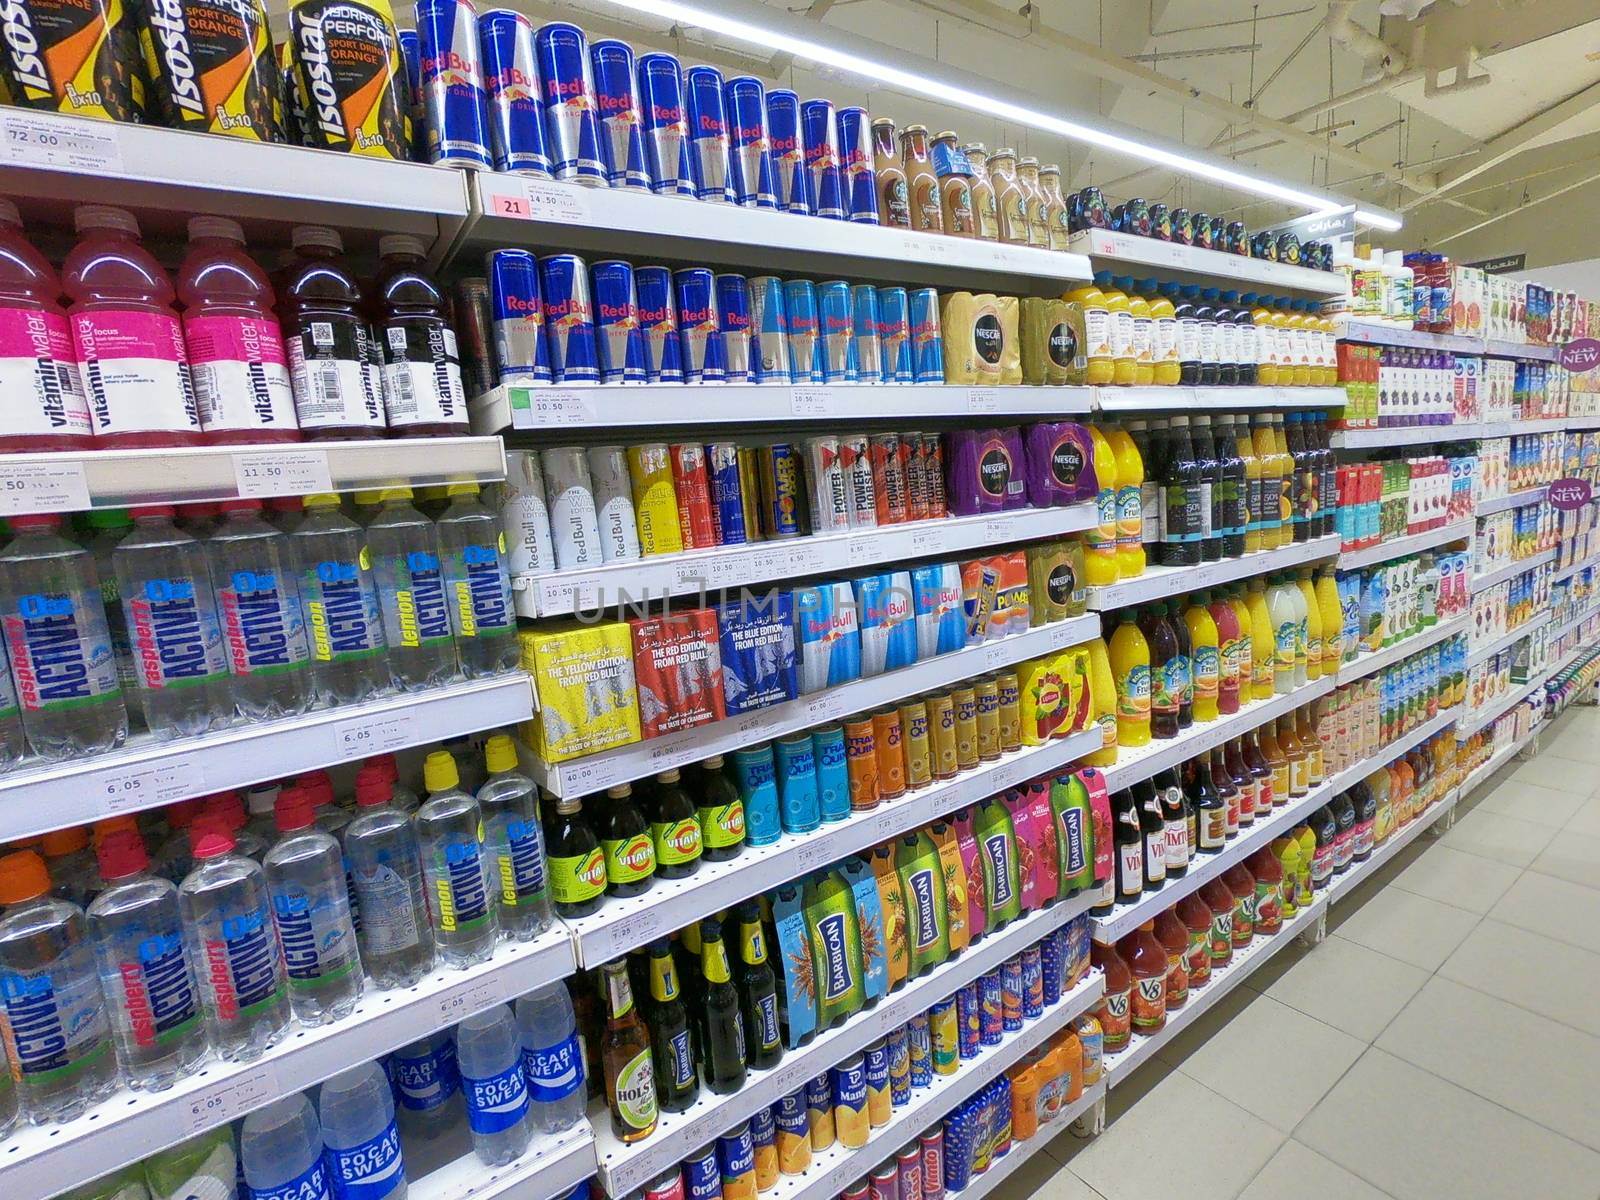 Aisle in Supermarket displaying energy drinks, juice bottles.